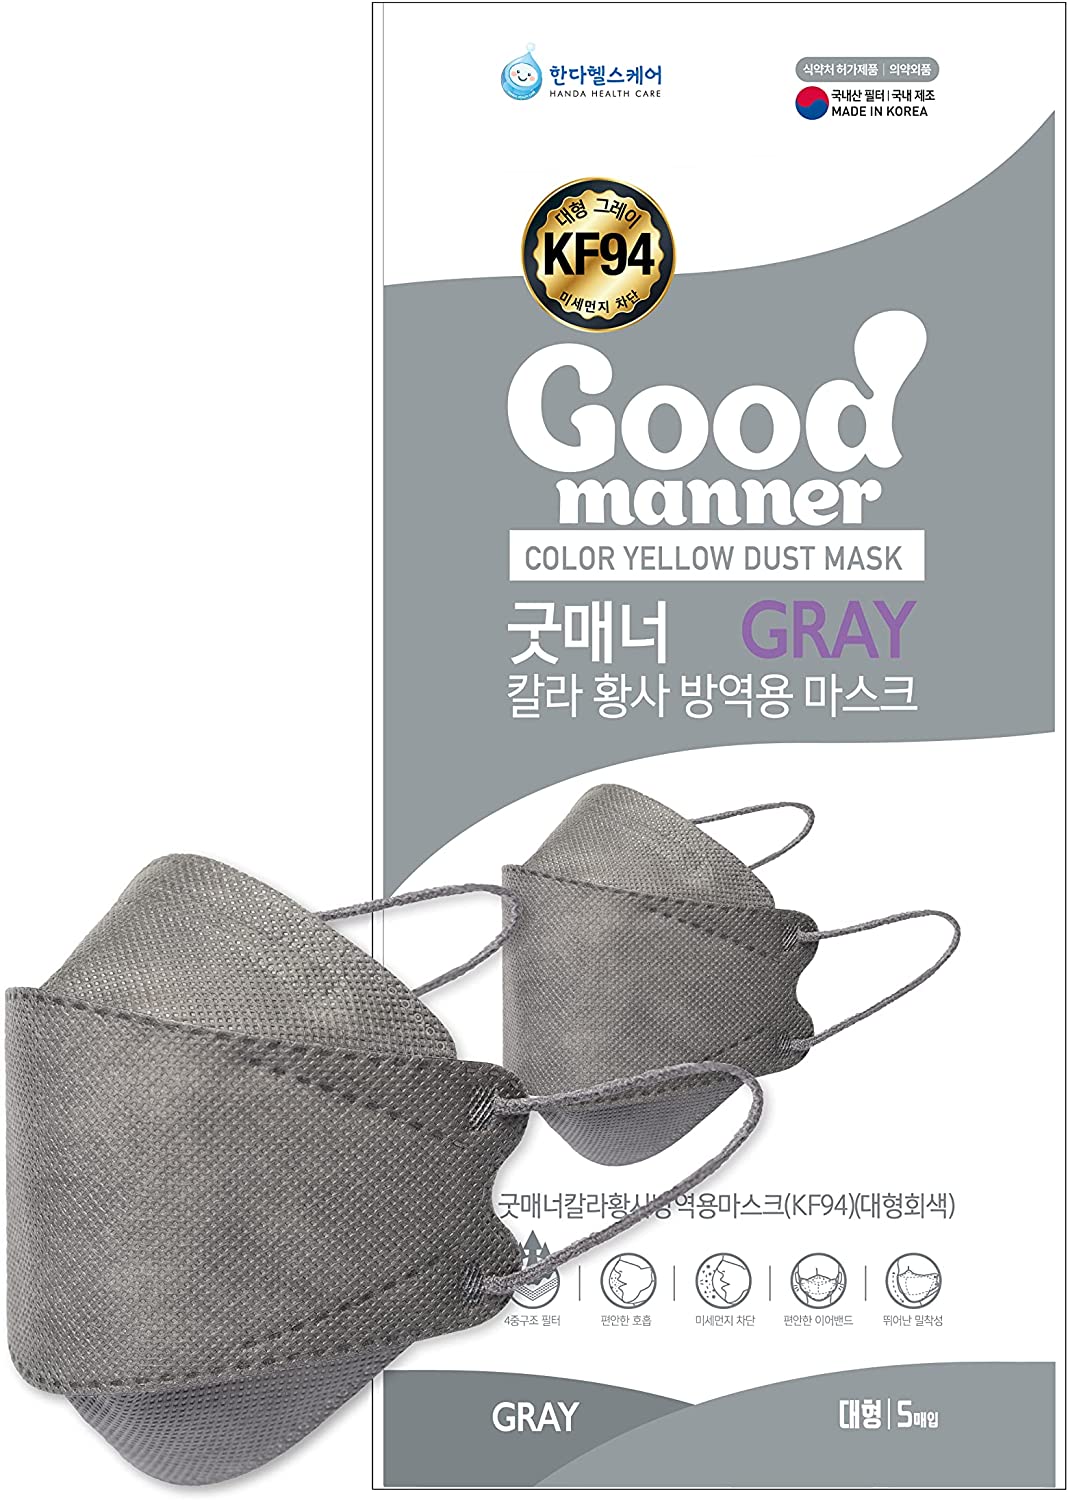 Good Manner Premium KF94 Disposable Face Masks (Pack of 5) - GRAY